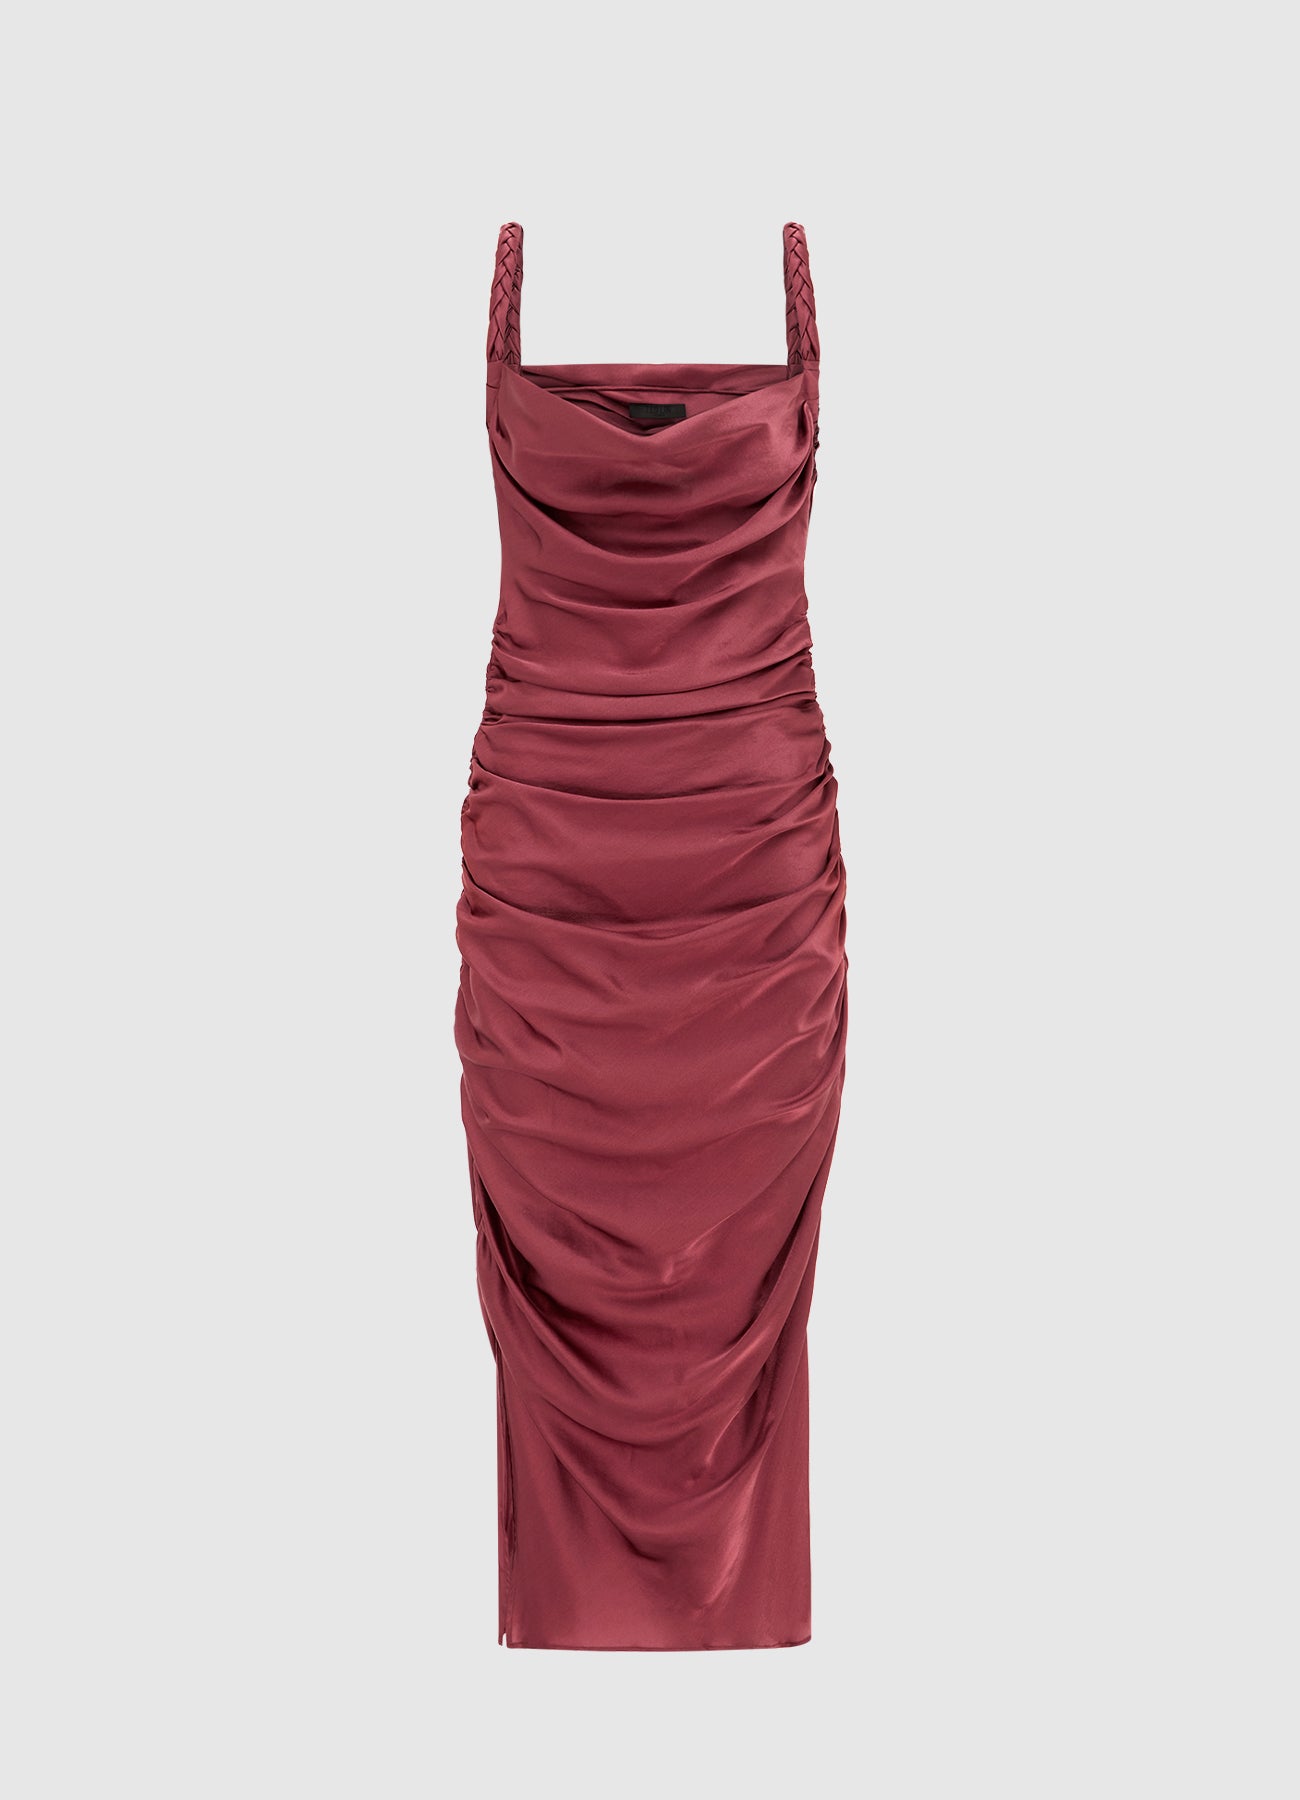 Rachel Cowl Neck Slip Dress - Burgundy | LEO LIN® Official Website